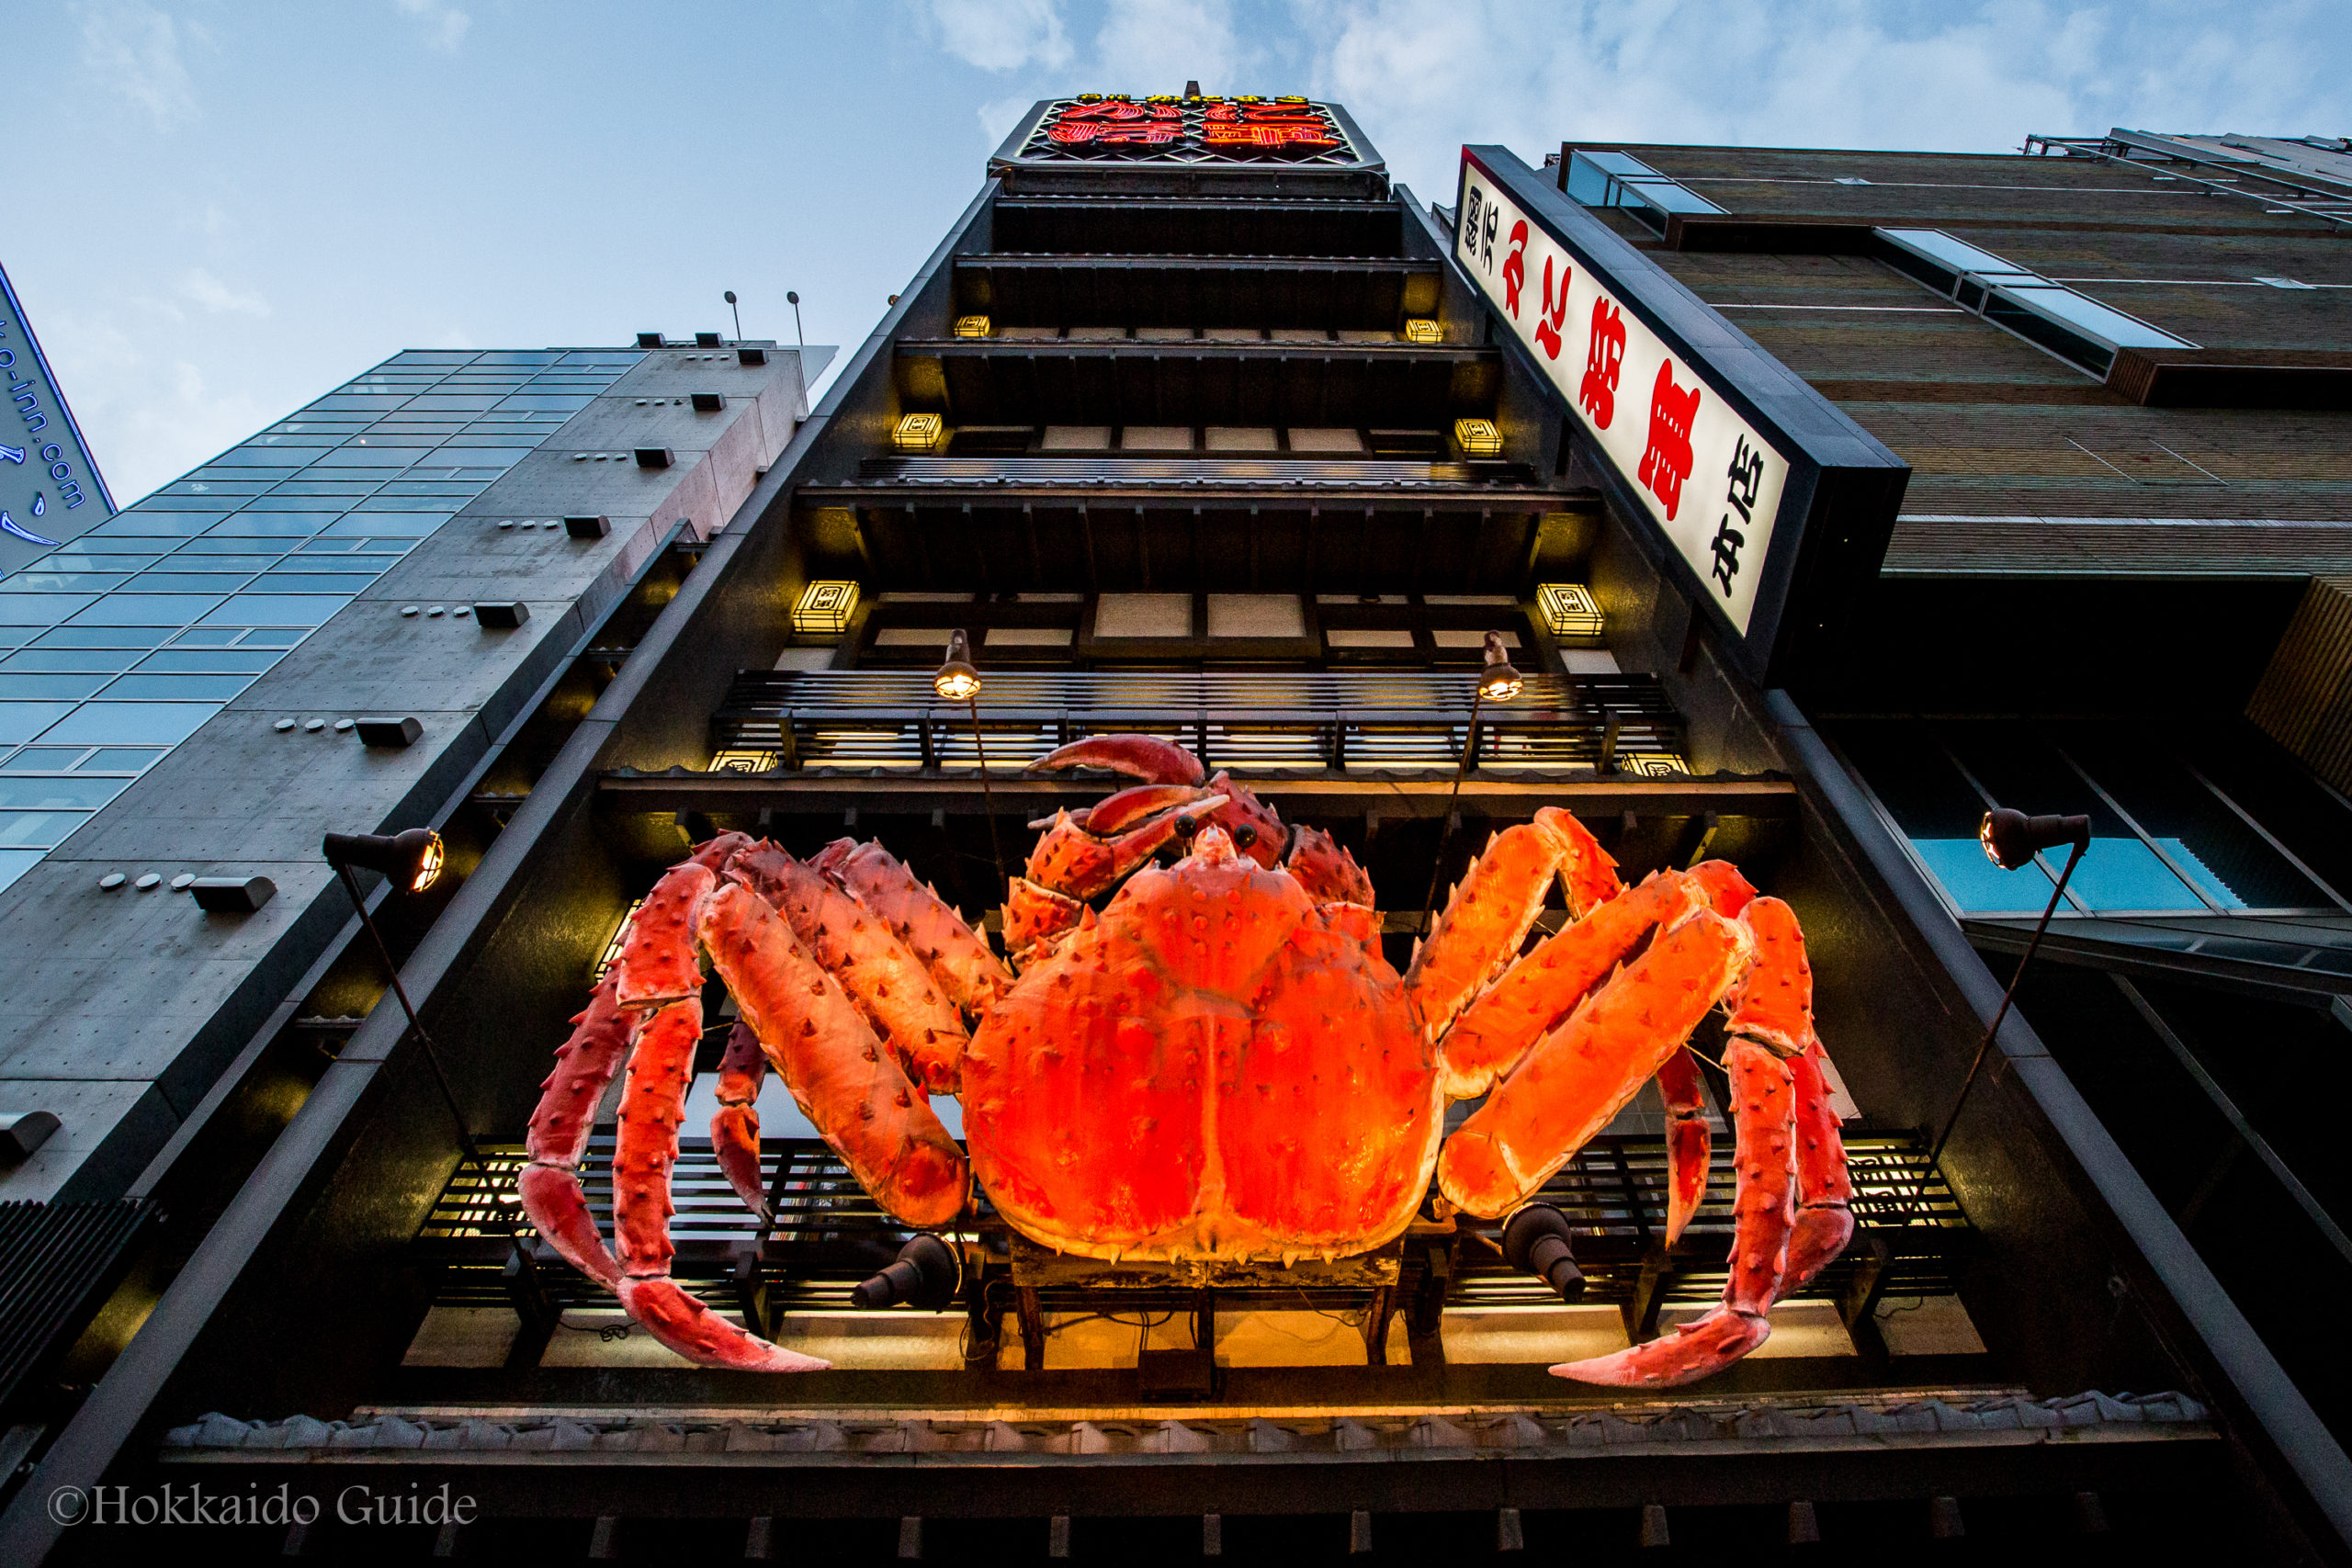 Hokkaido Crab Shogun Restaurant